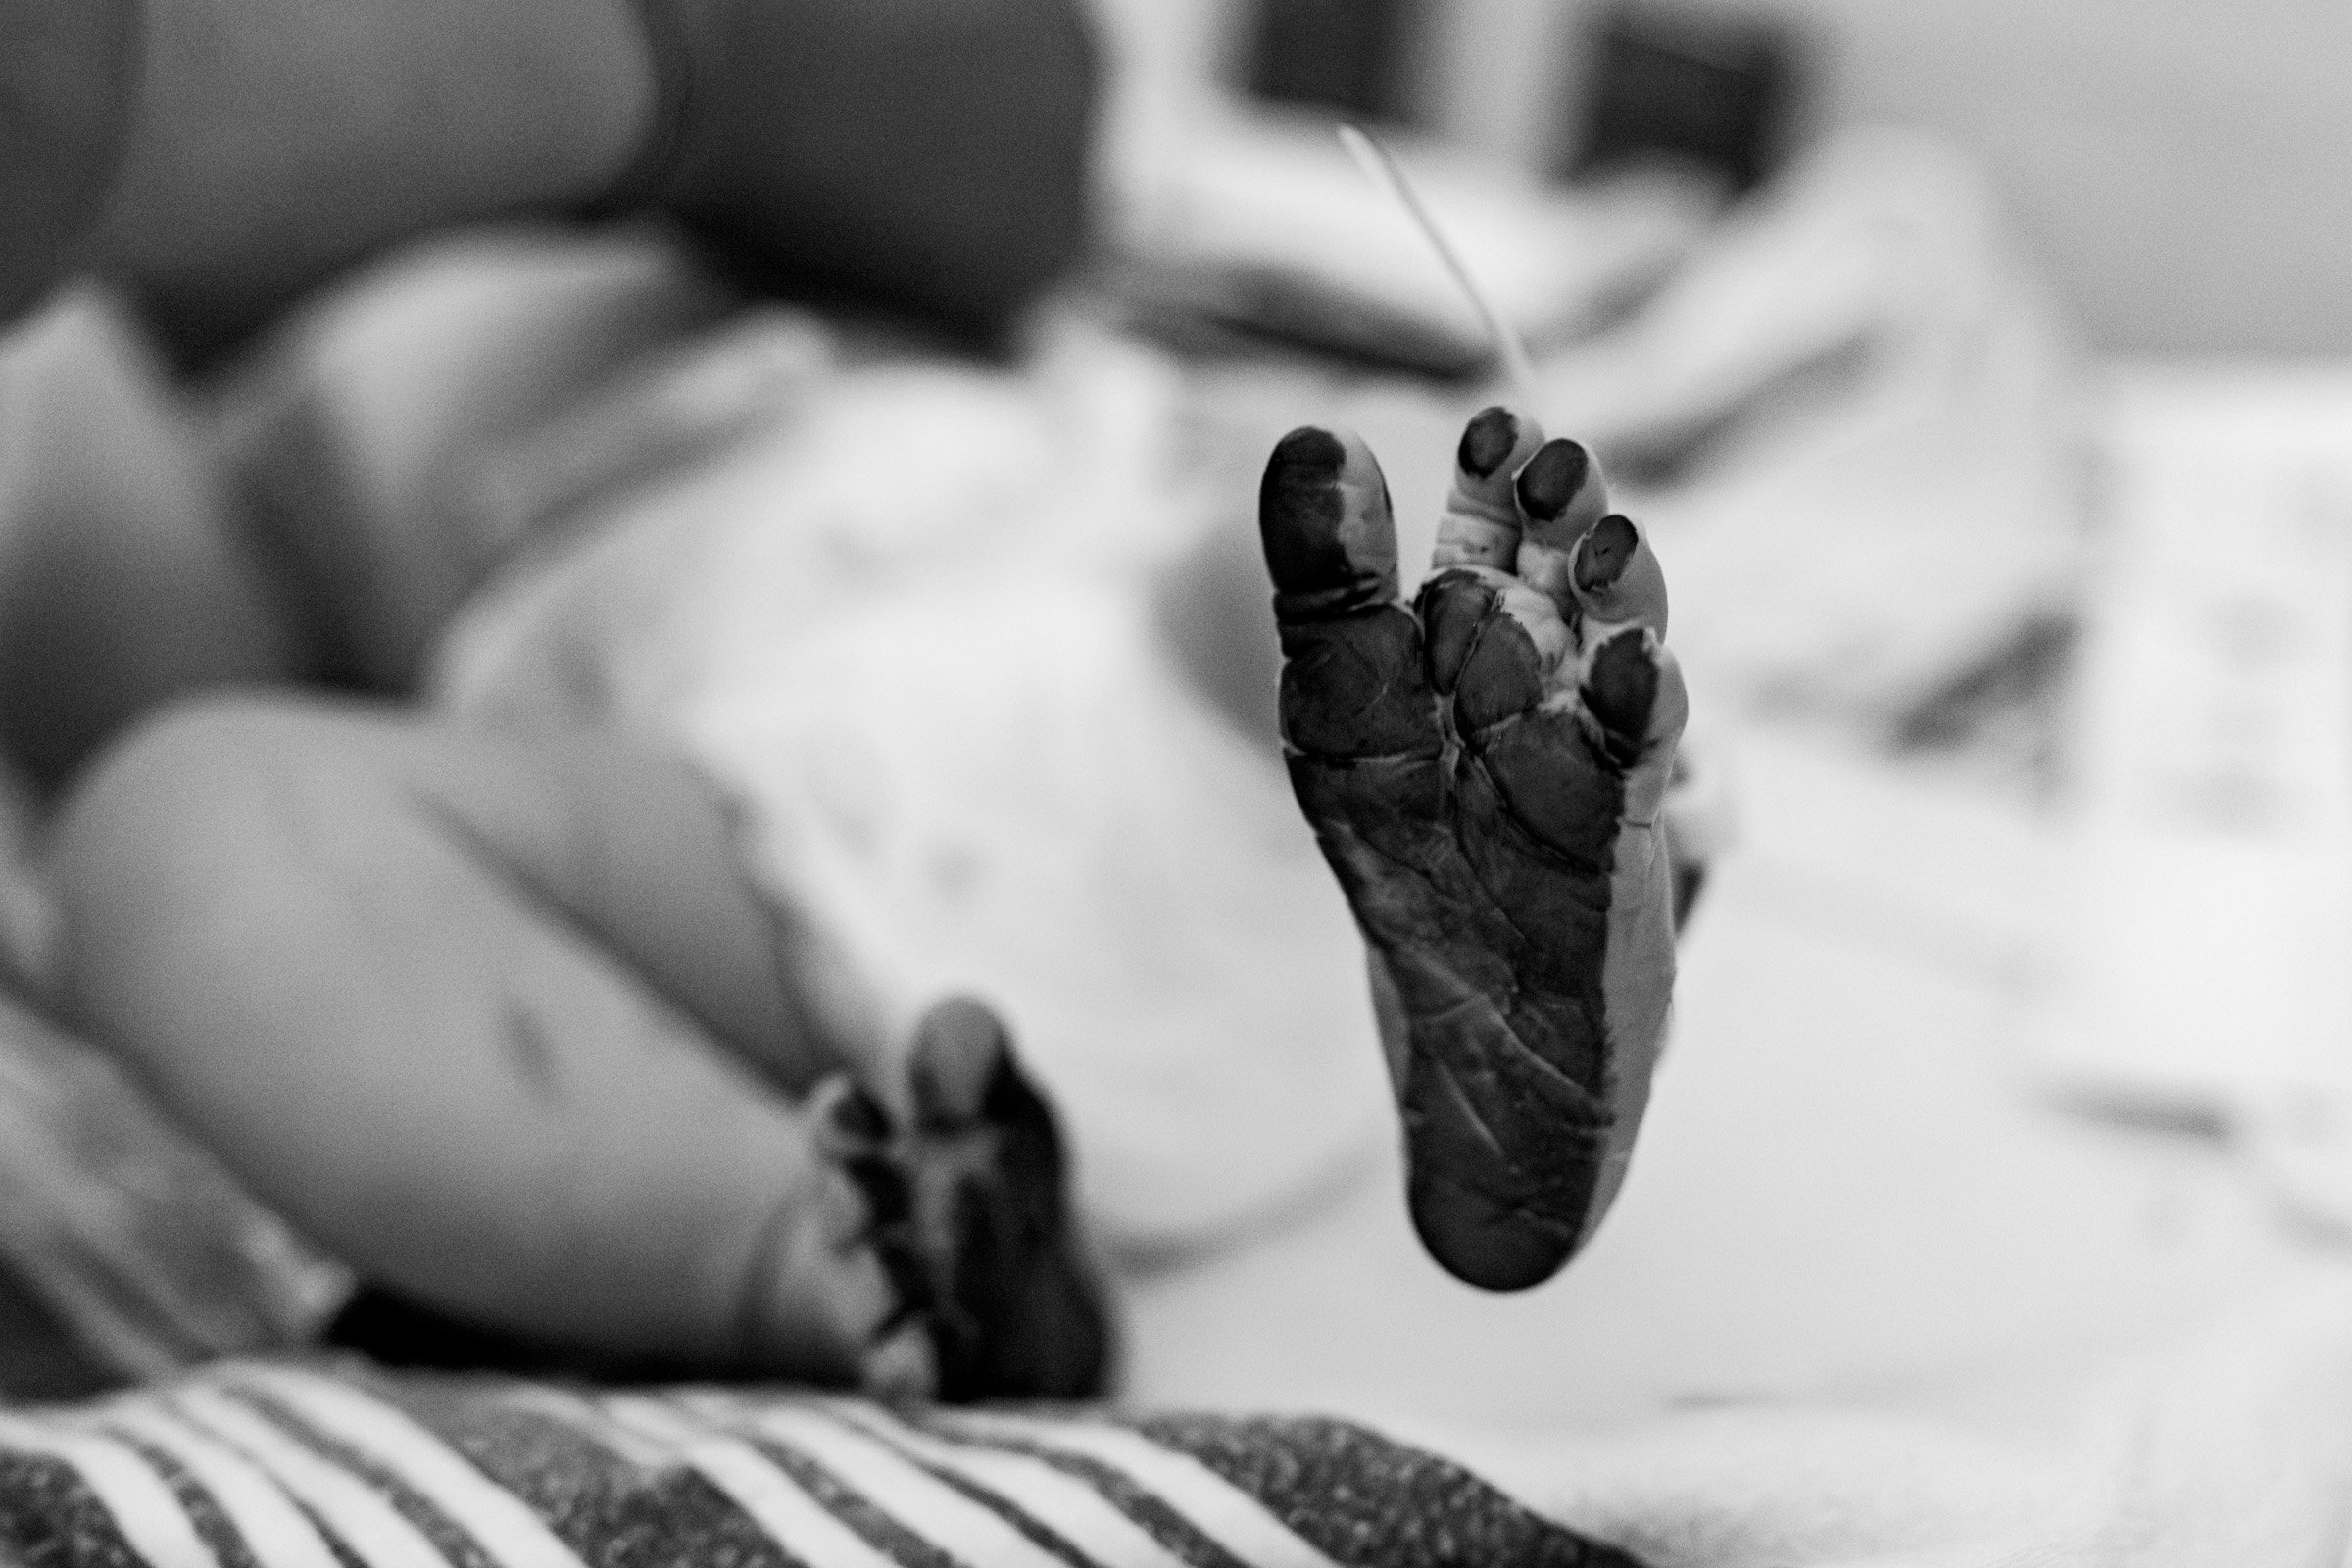 inky newborn baby feet